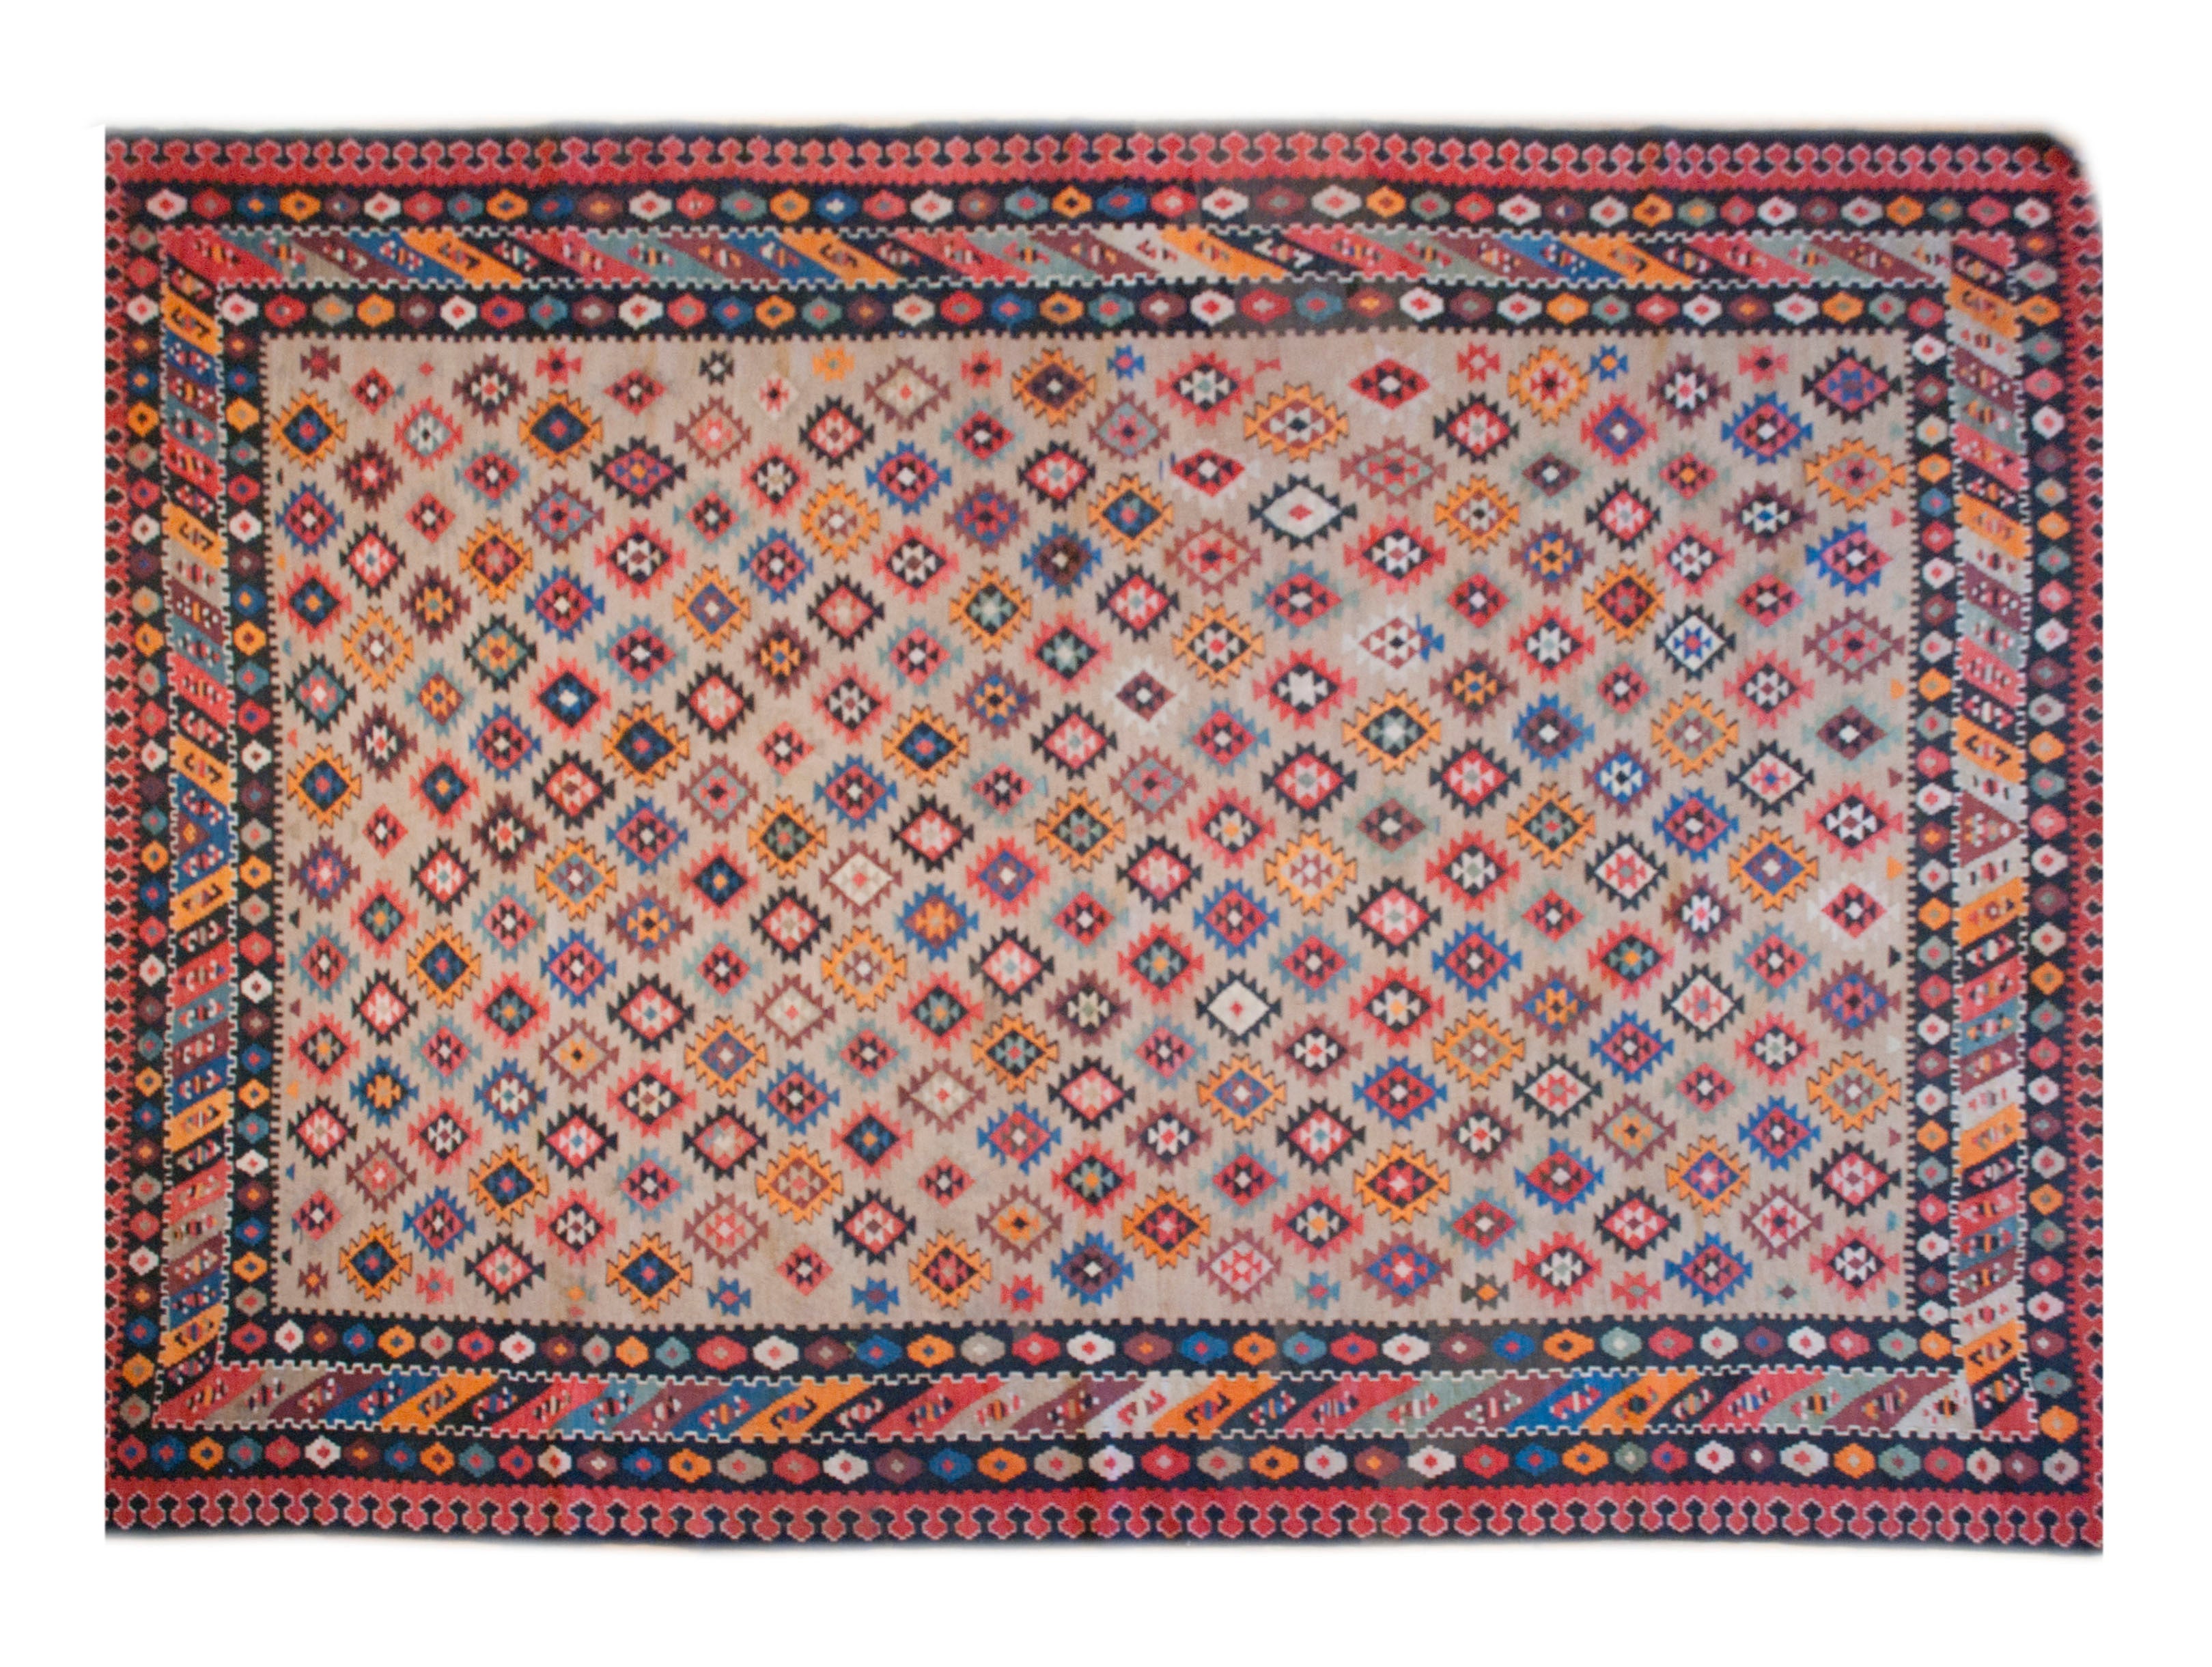 Early 20th Century Persian Azari Kilim Rug, 7'5" x 9'10"